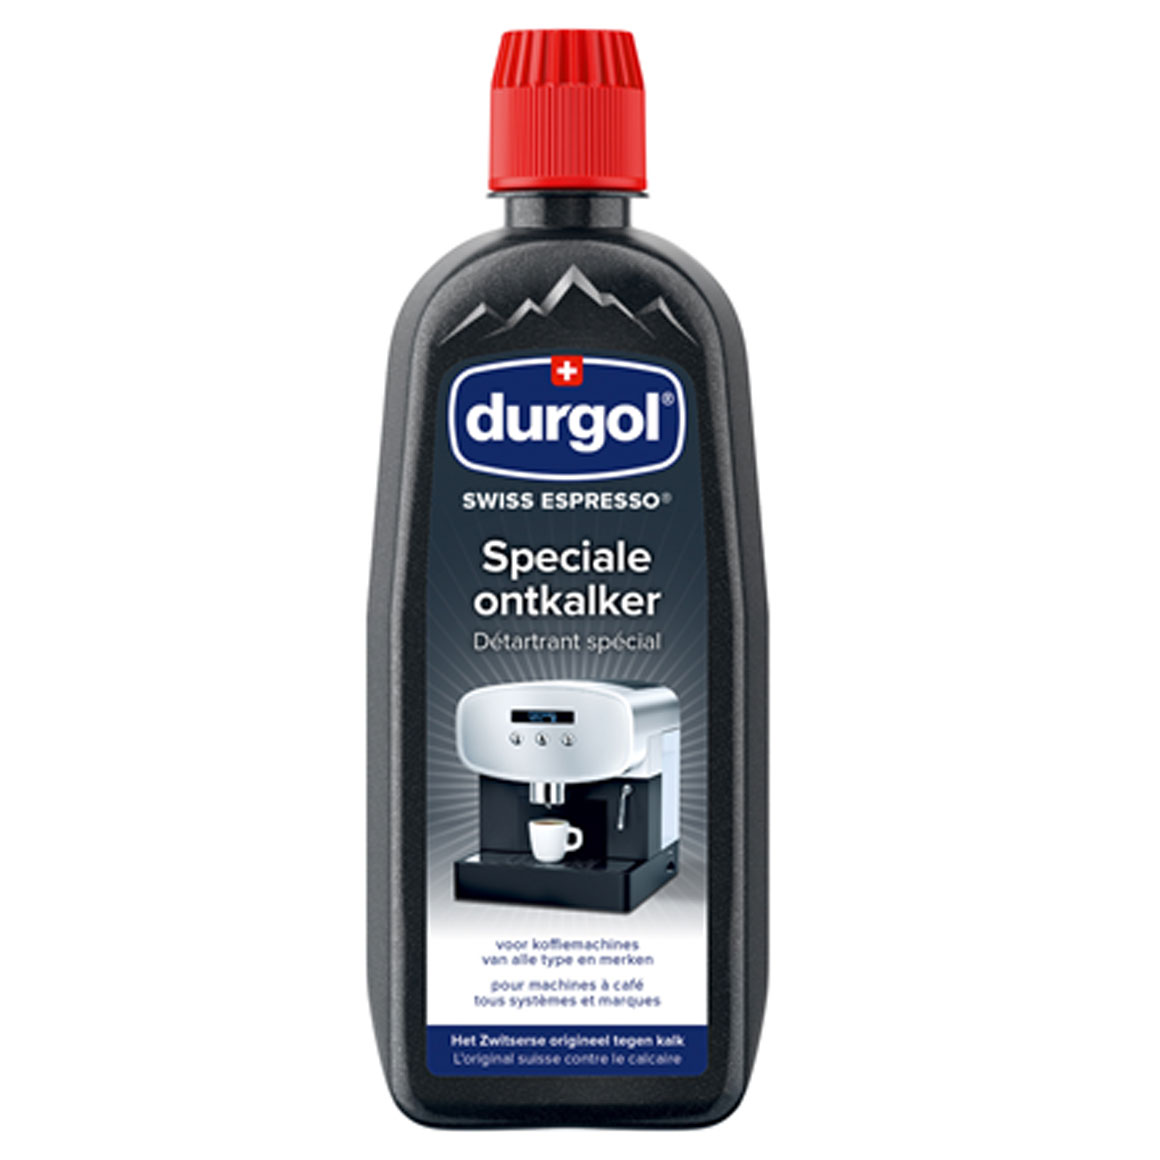 Durgol swiss espresso speciale ontkalker (500 ml)